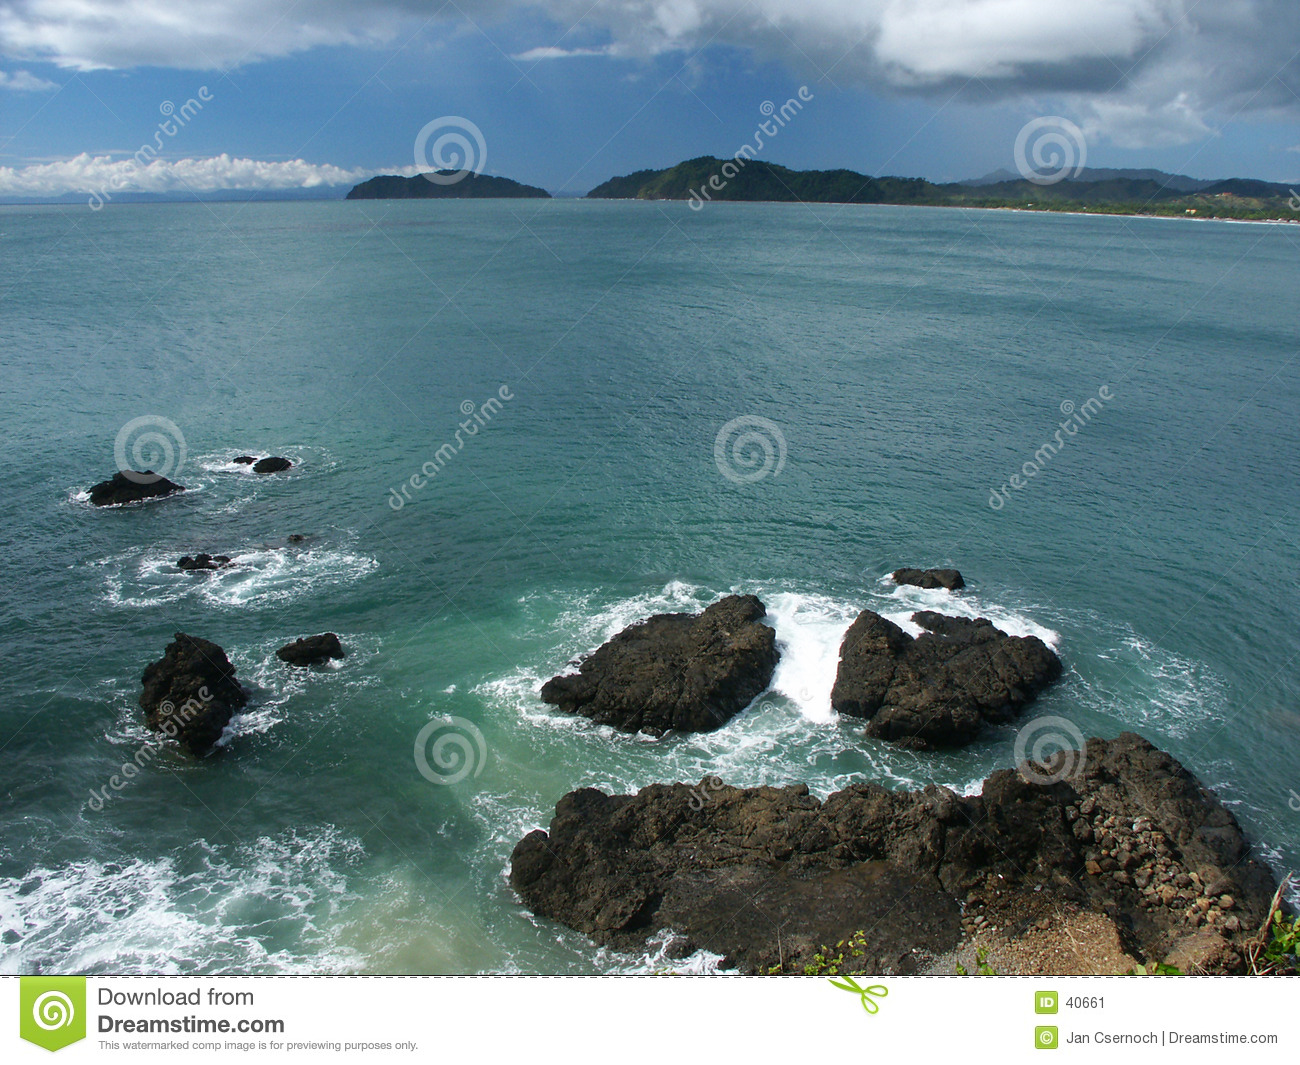 Waves Breaking On Giant Rocks Stock Image   Image  40661